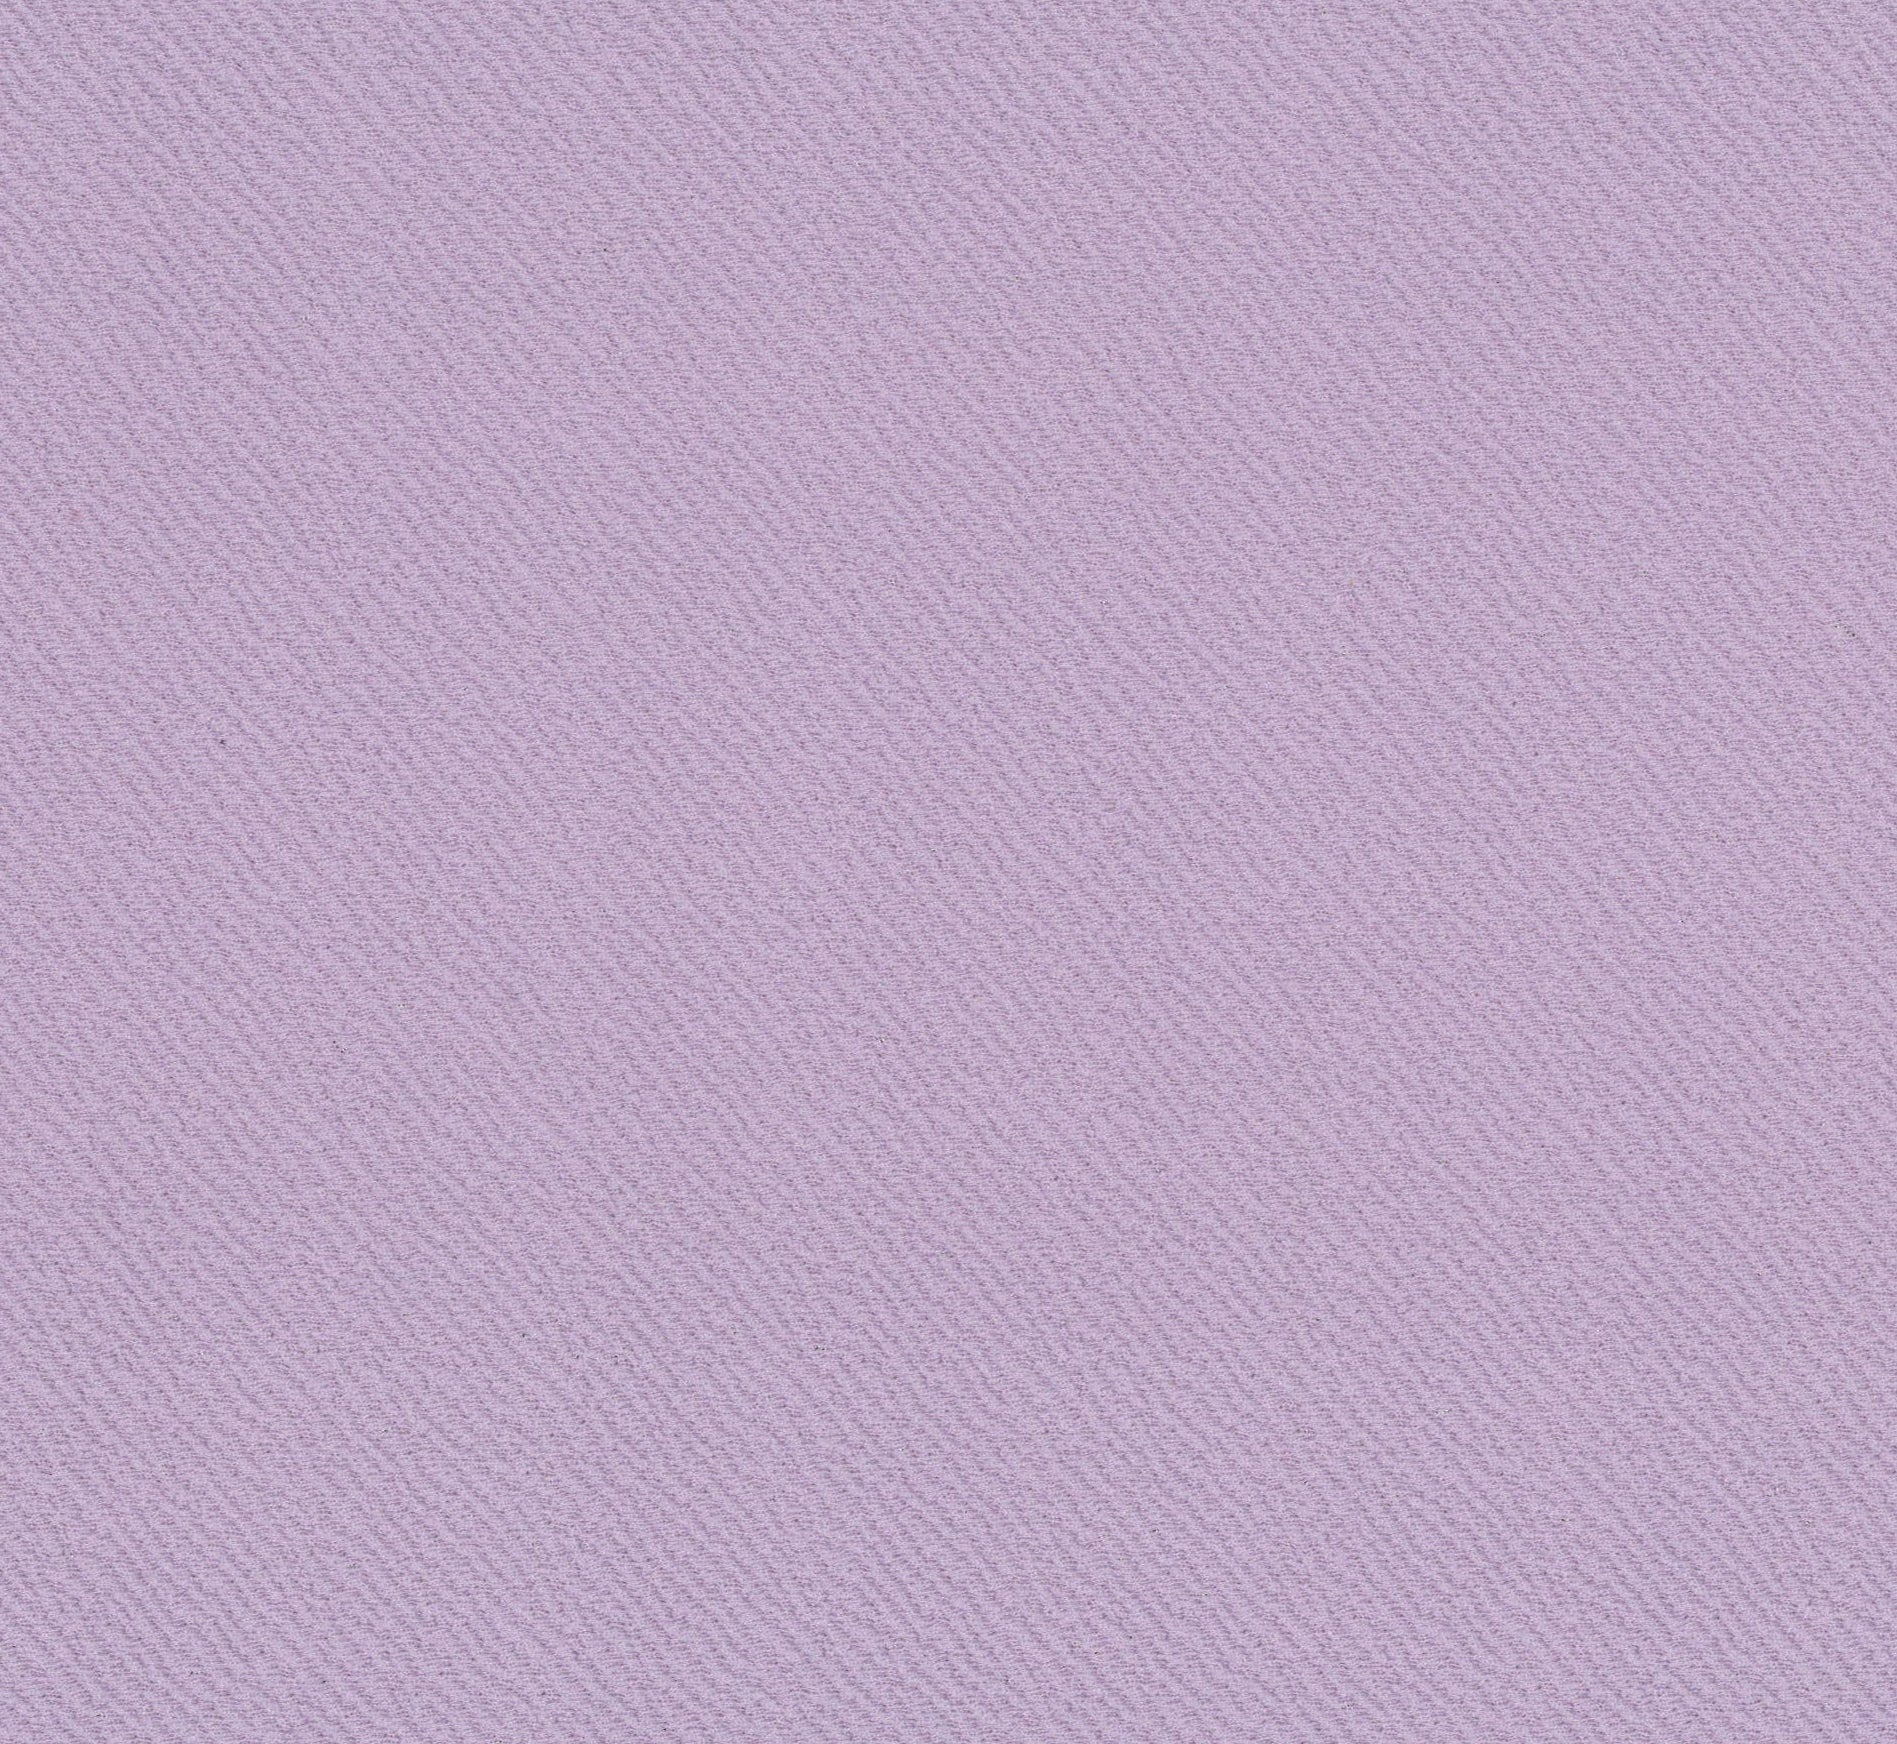 13018-13 Light Lilac Riverpool Jacquard Plain Dyed Blend